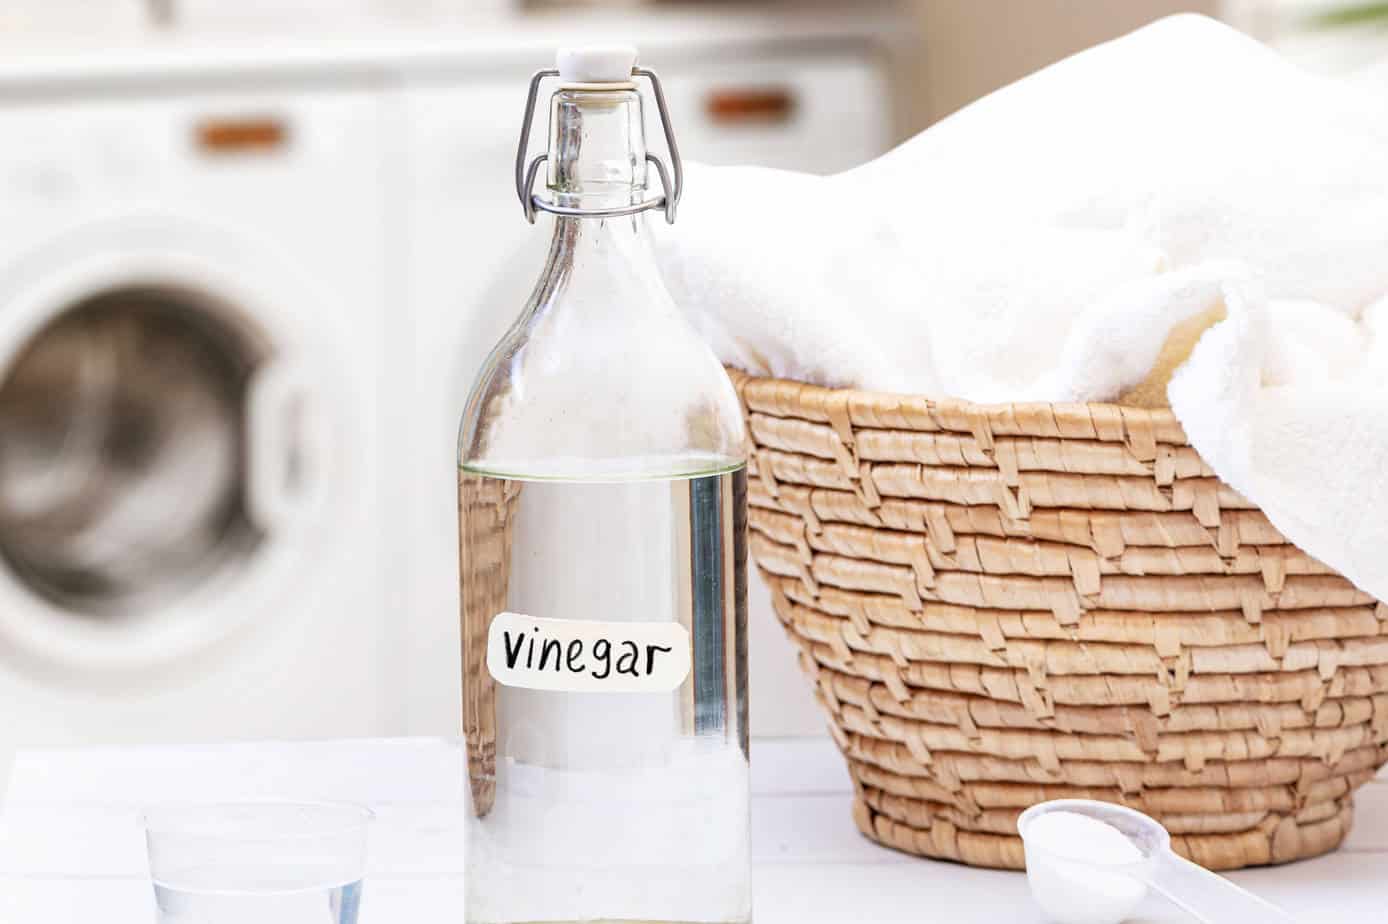 White Vinegar instead of washing powder 